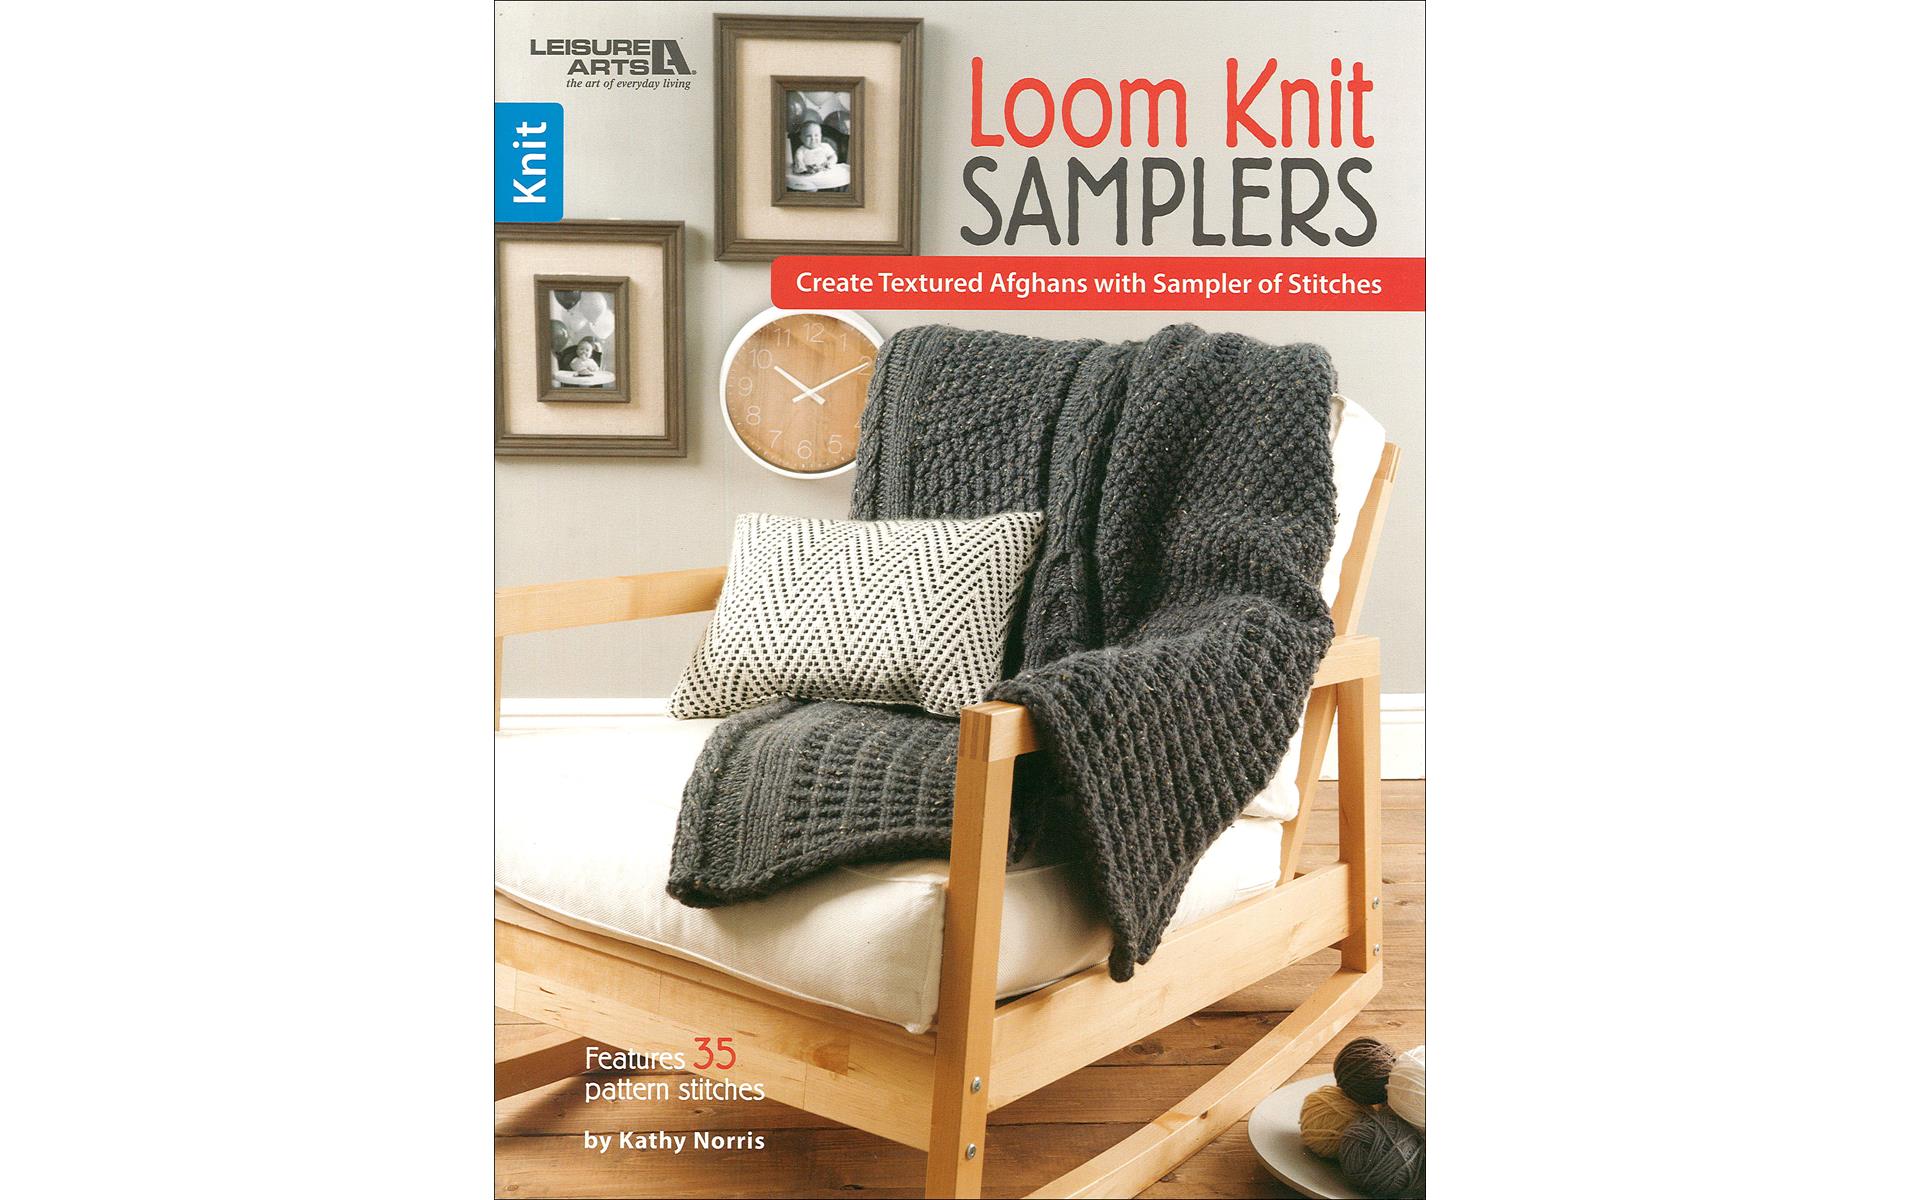 Leisure Arts Loom Knit Samplers Knitting Book